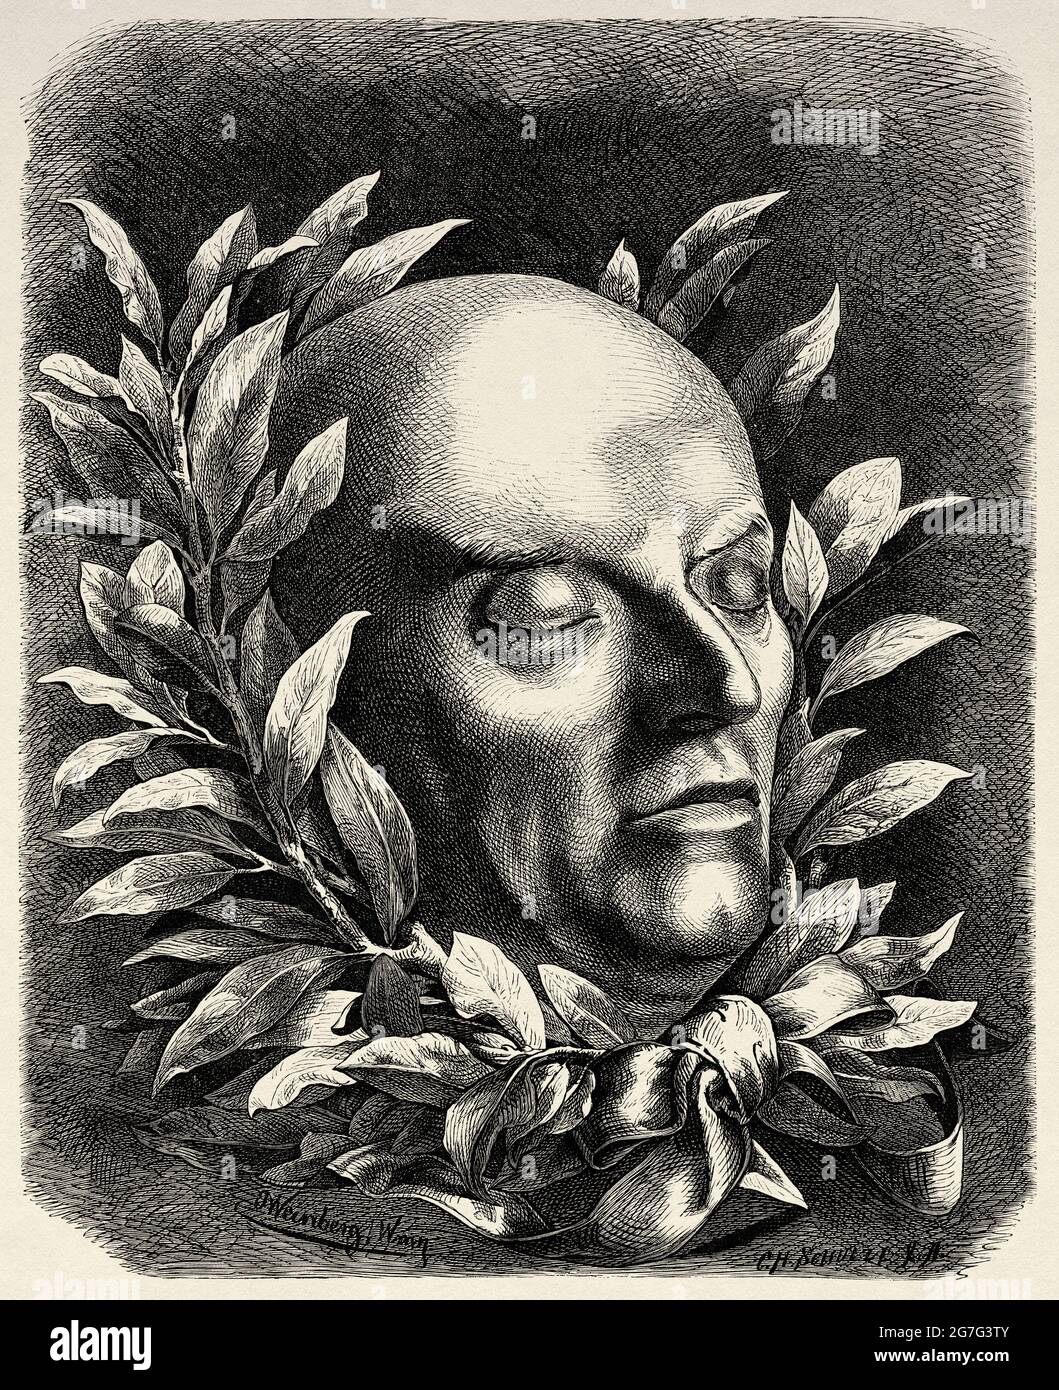 Friedrich schiller death mask. Old 19th century engraved illustration from El Mundo Ilustrado 1880< Stock Photo